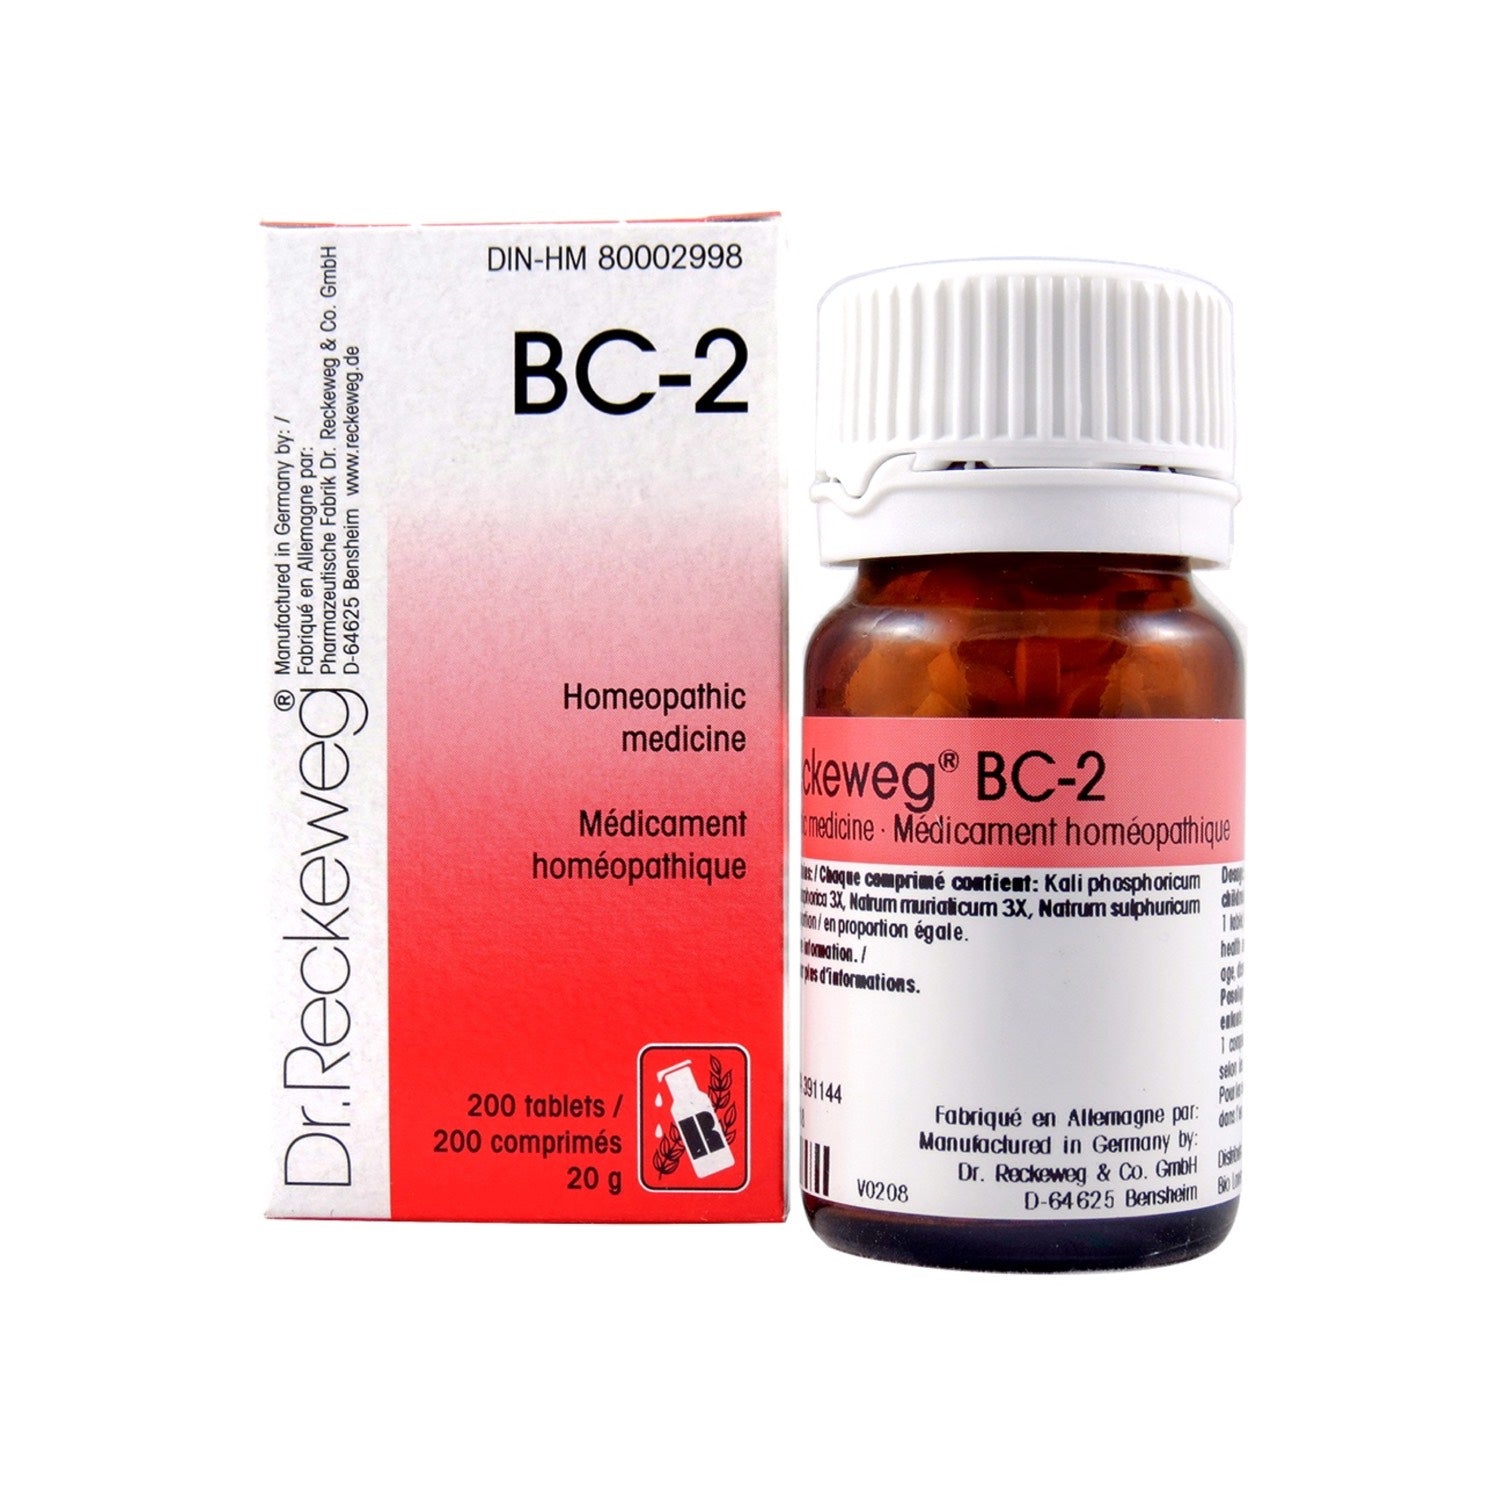 BC-2 Homeopathic medicine – Combination salt  200 tablets (20 g)